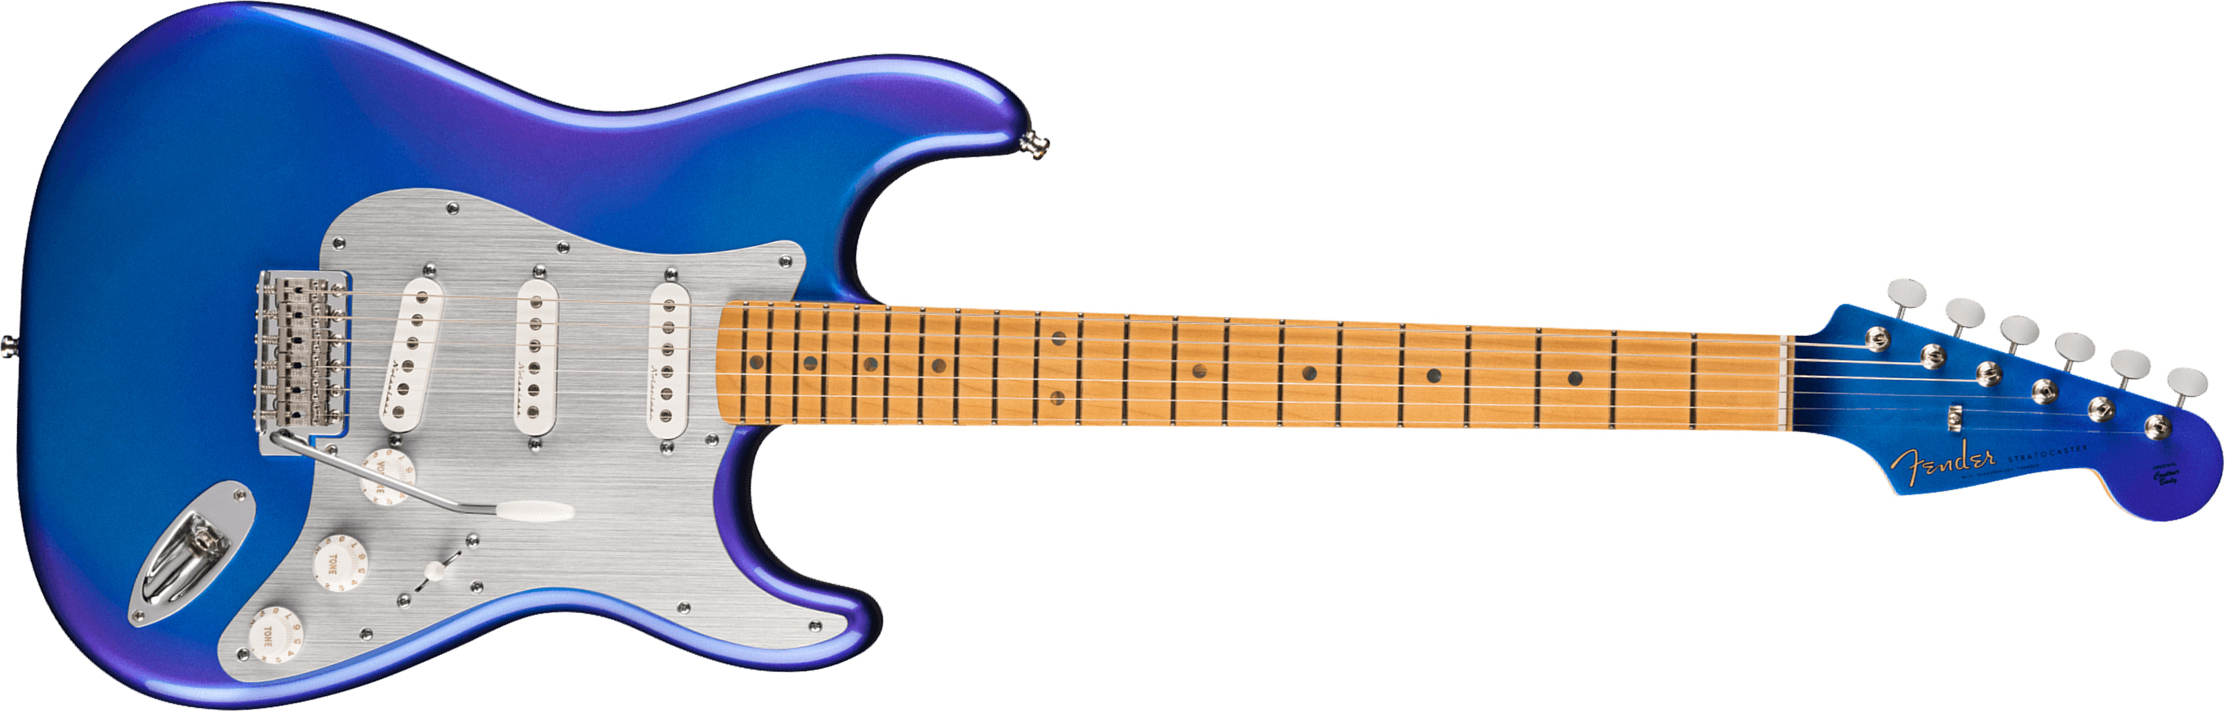 Fender H.e.r. Strat Ltd Signature Mex 3s Trem Mn - Blue Marlin - E-Gitarre in Str-Form - Main picture